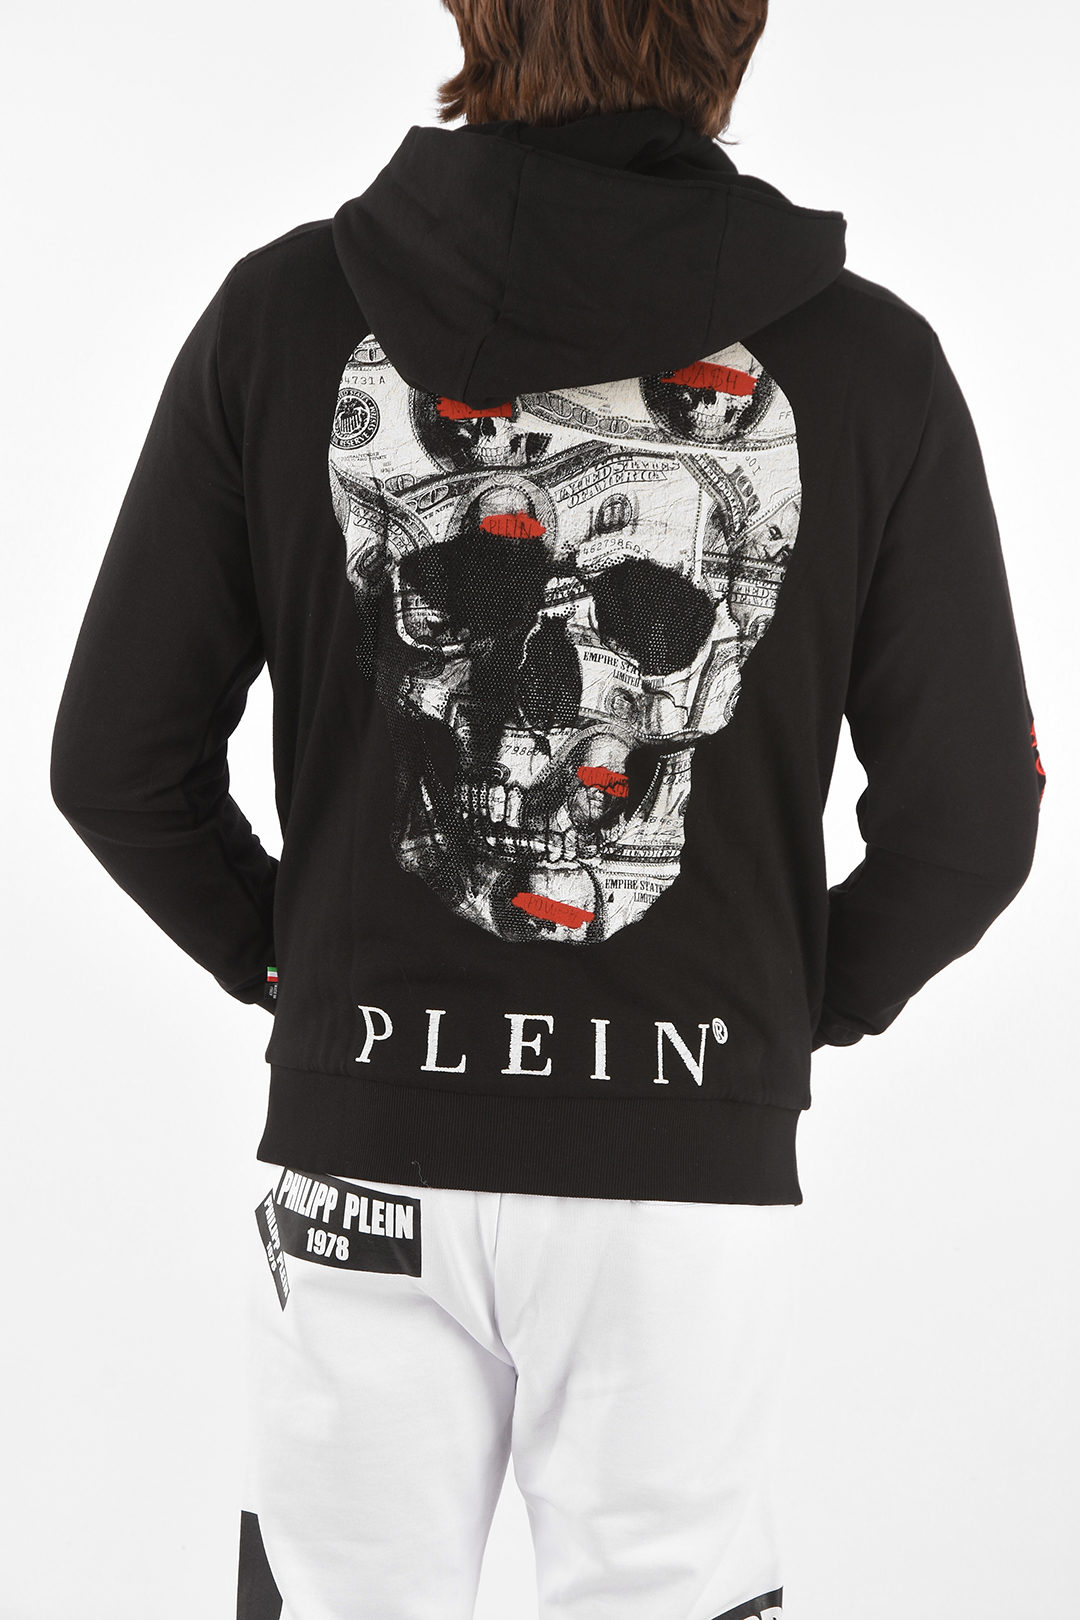 meel Tub Fonetiek Philipp Plein HOMME Hooded DOLLAR Sweatshirt with Print and Rhinestone  Embellishment men - Glamood Outlet